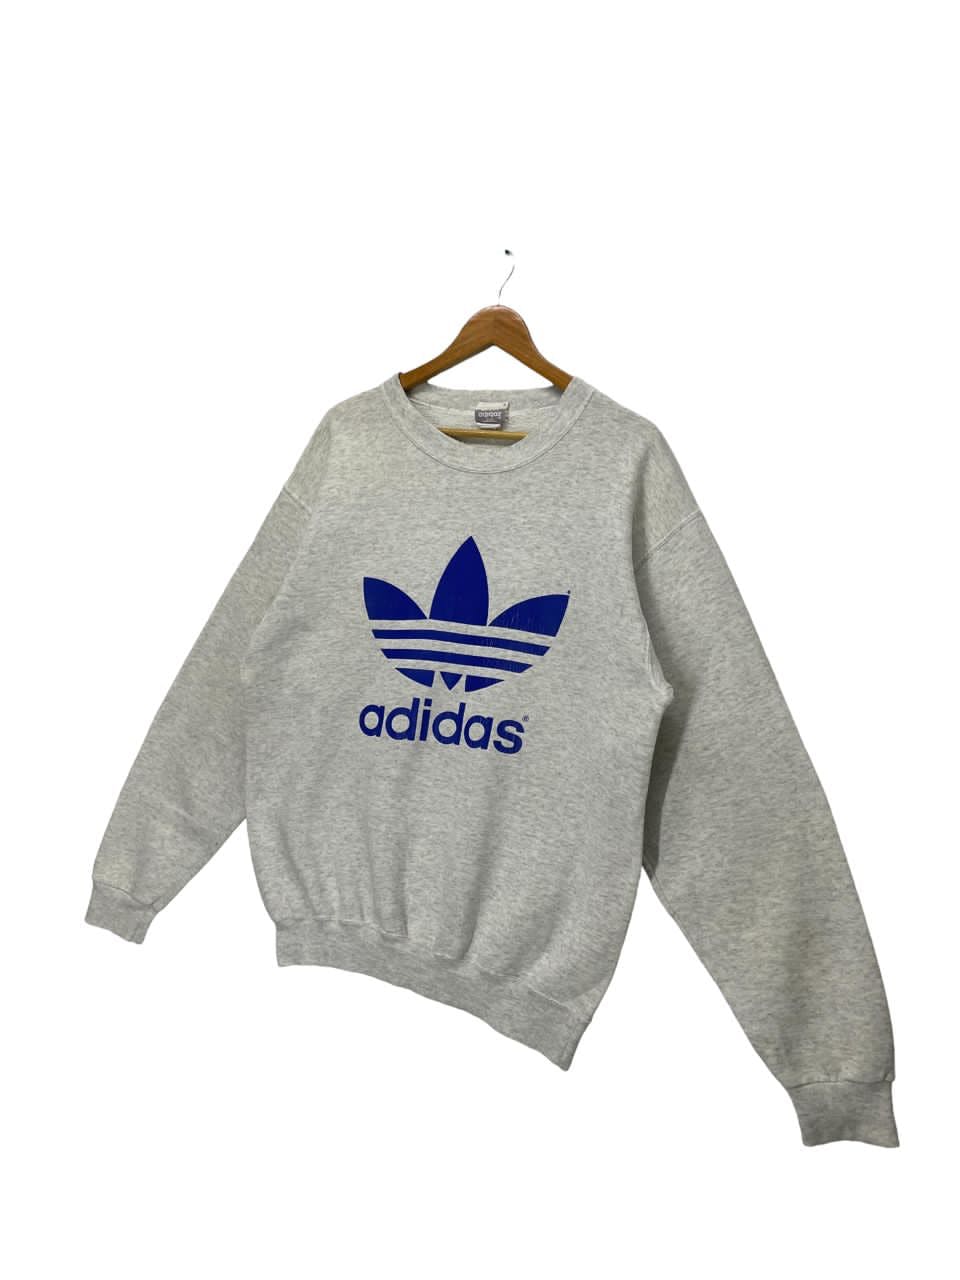 💥True Vintage 90's Adidas Made In Usa Crew Sweatshirt - 4